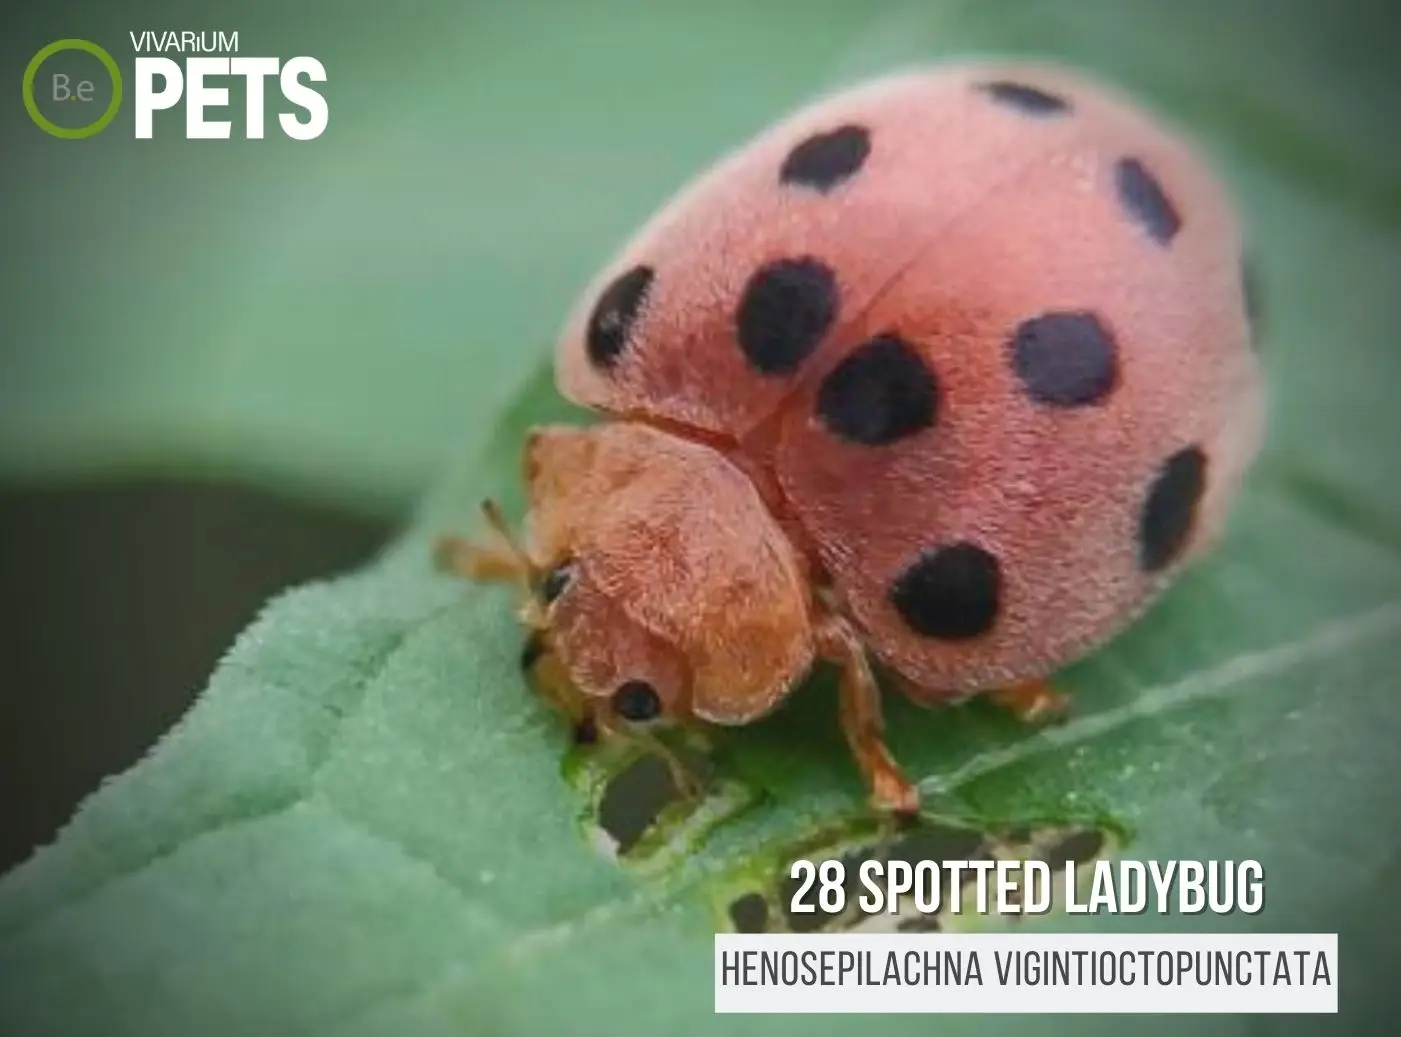 Henosepilachna vigintioctopunctata: Hadda Beetle Guide